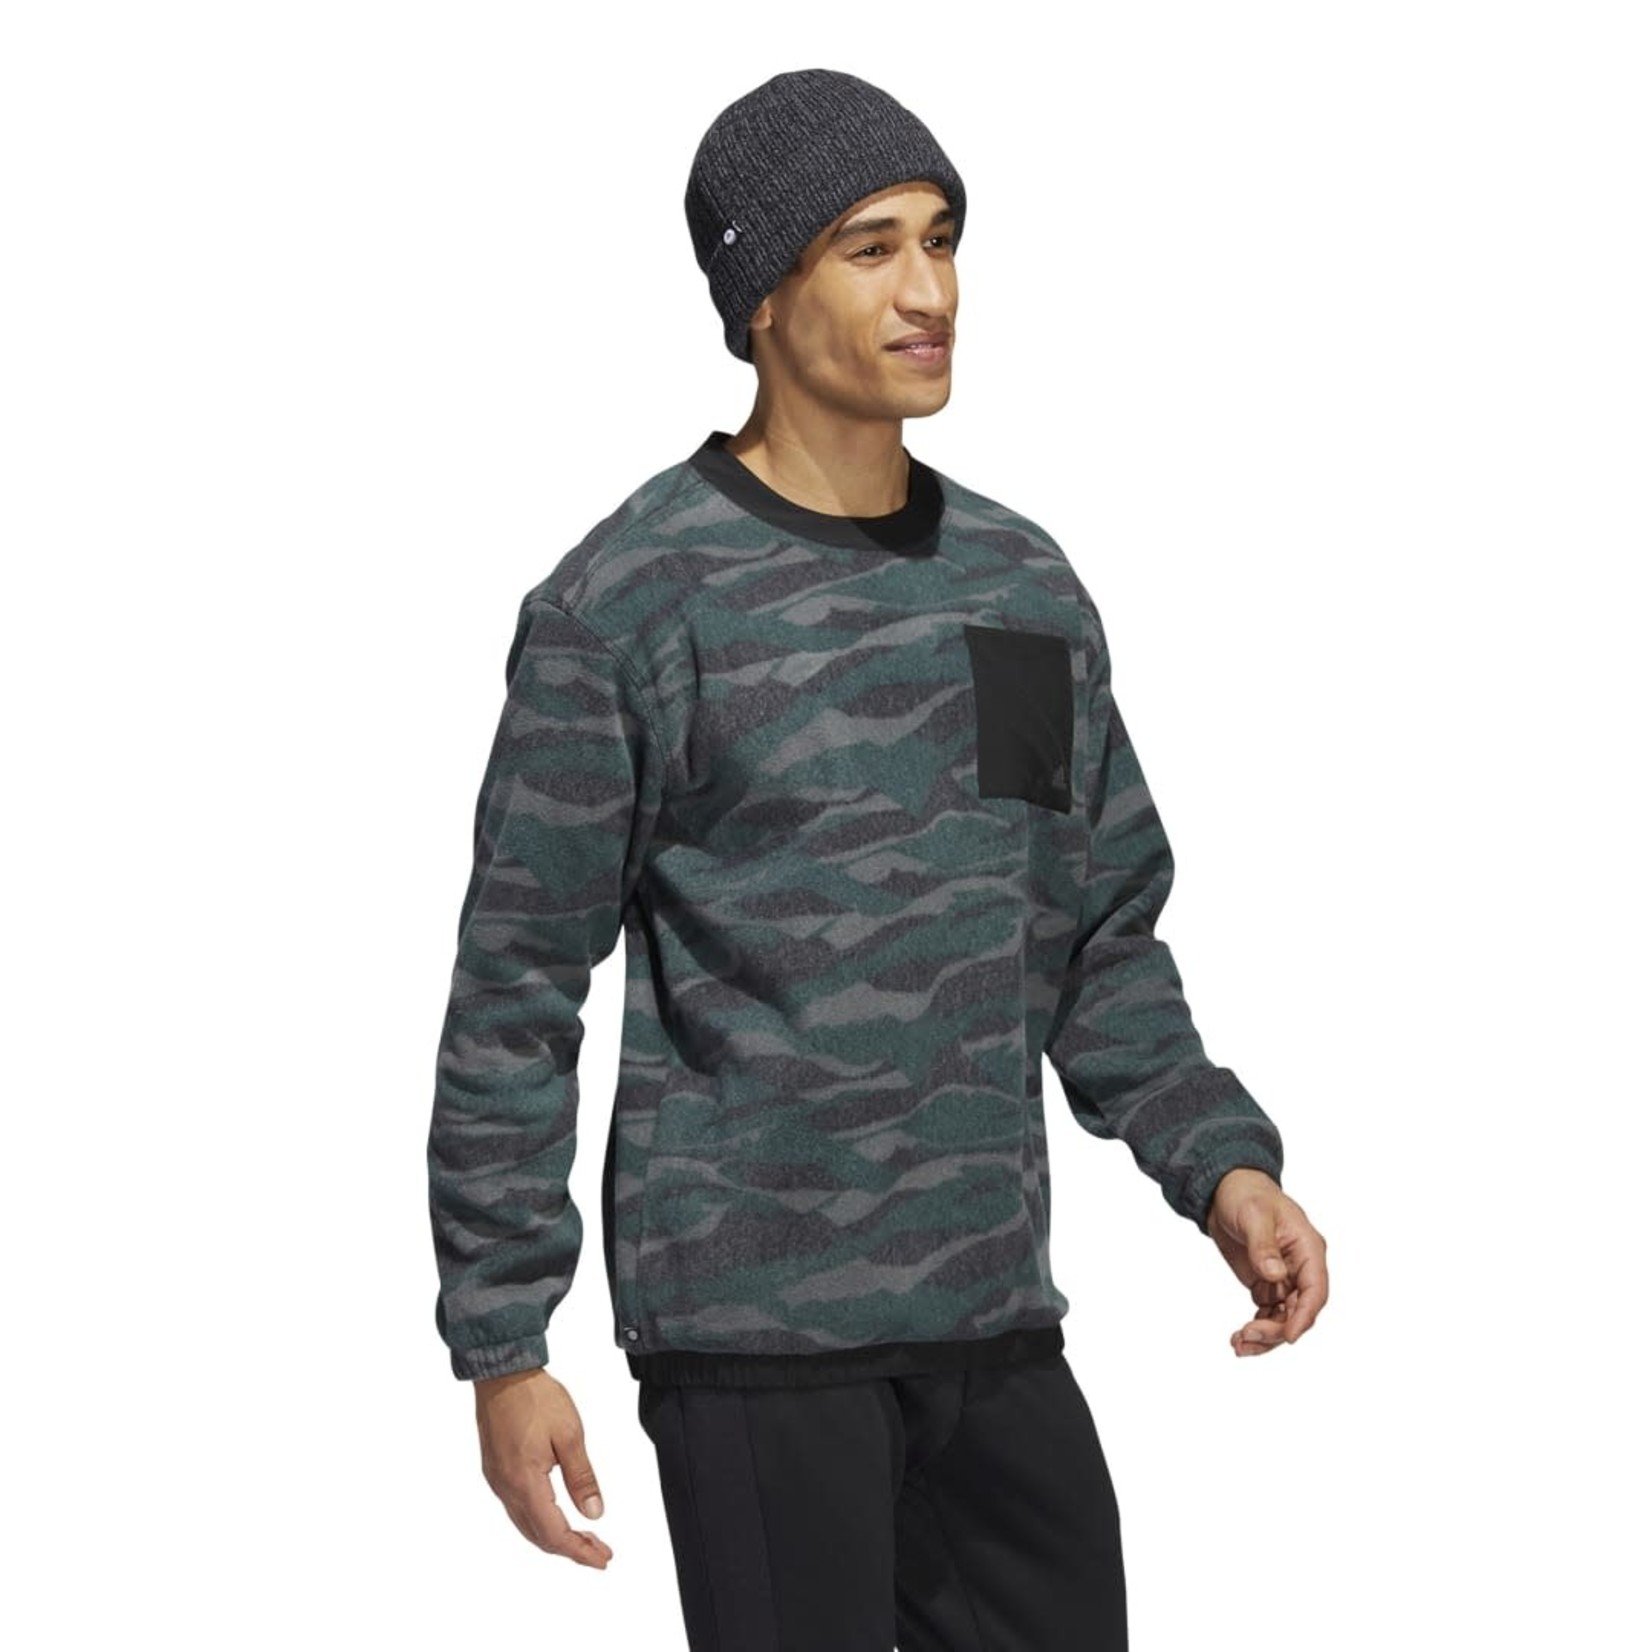 Adidas Adidas M Texture-Print Sweatshirt - Army CBlack/Dksim